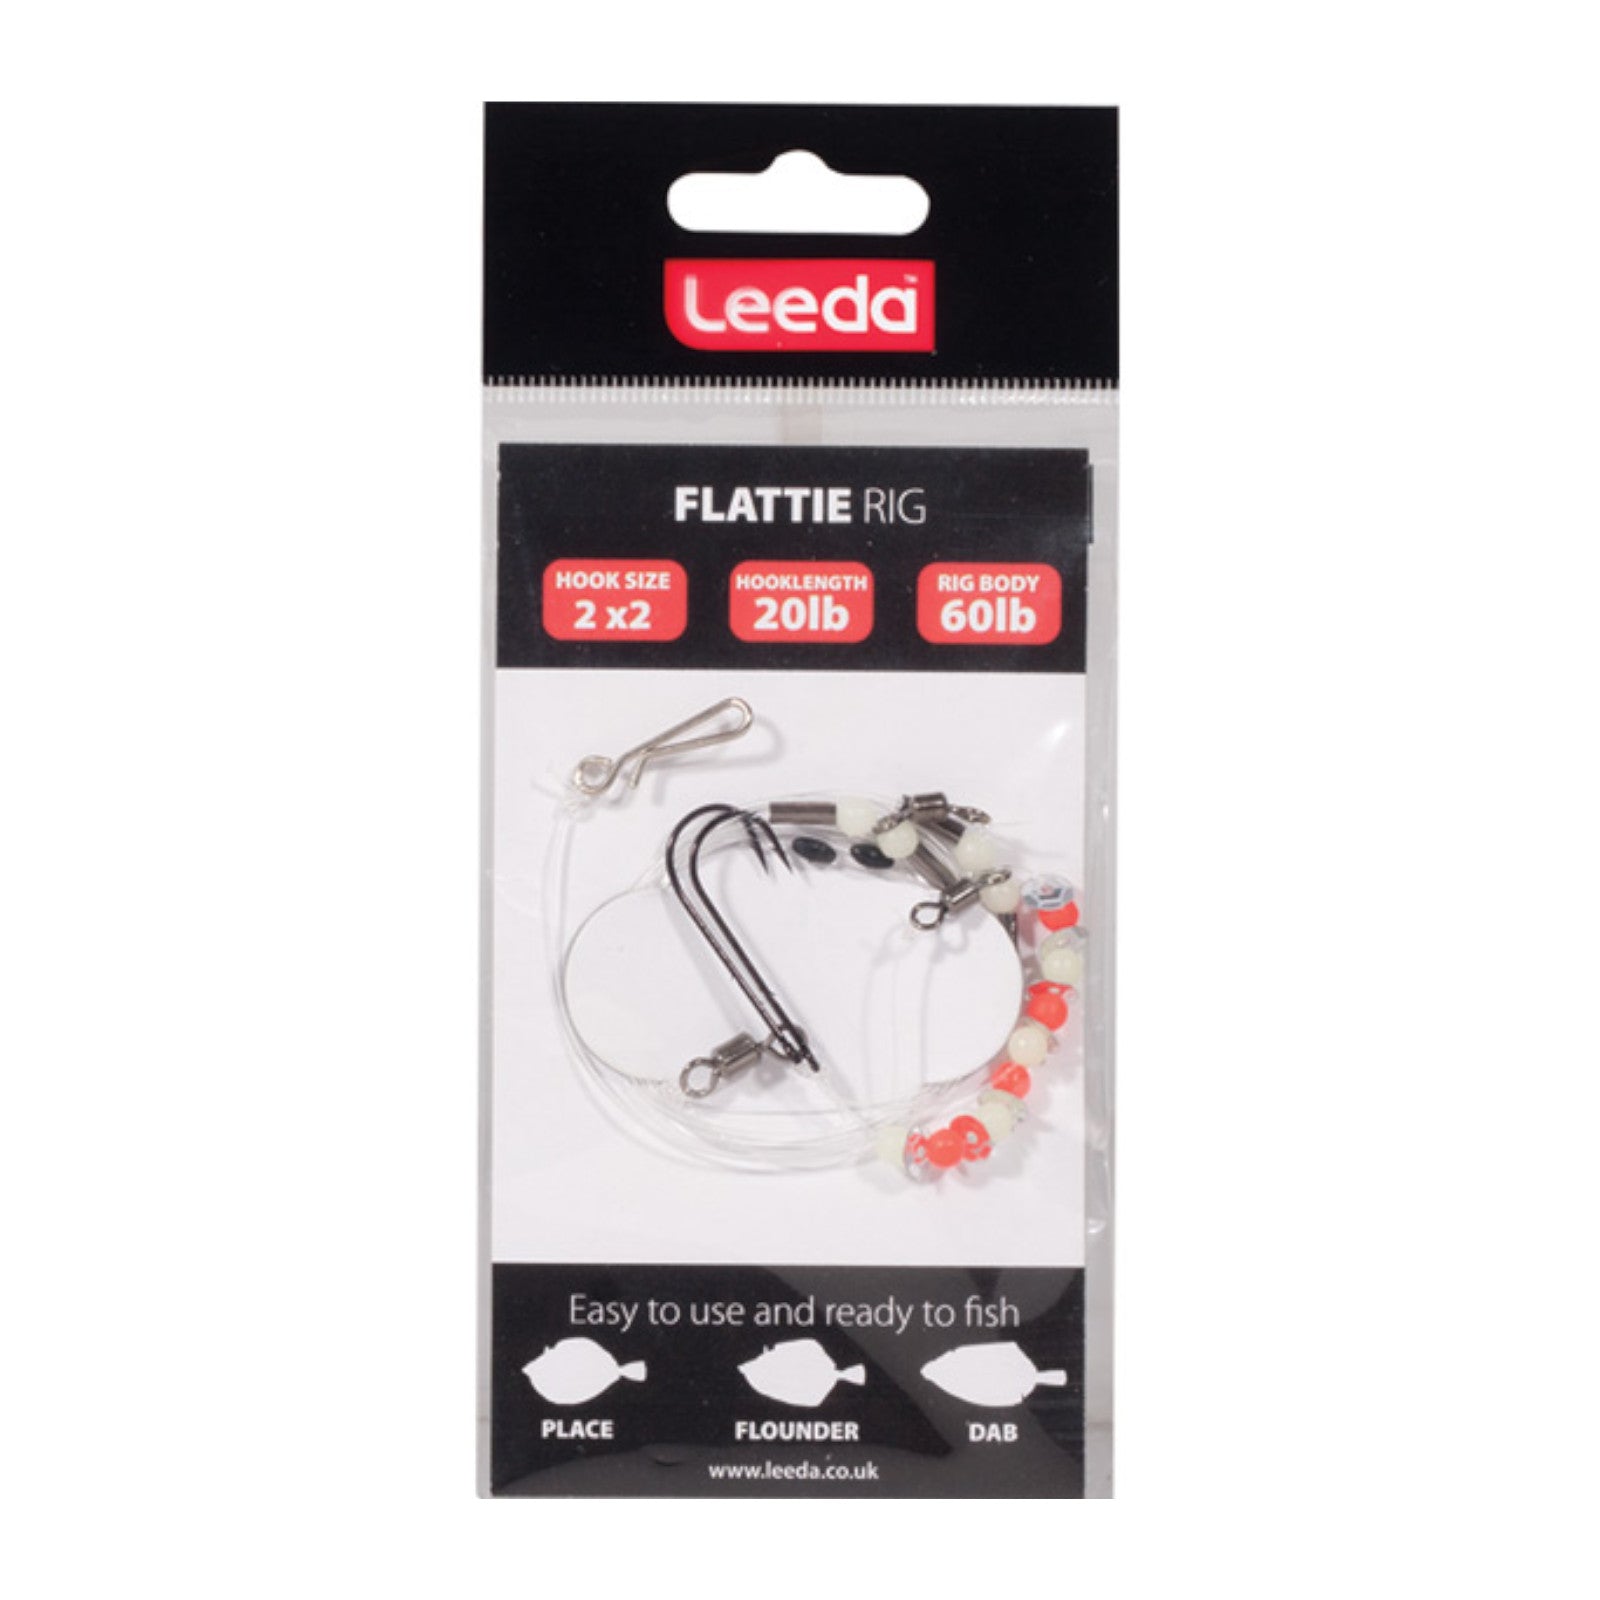 Leeda Flattie Rig 2x2 20lb 5 Pack Fishing Line Lure Alternate 1